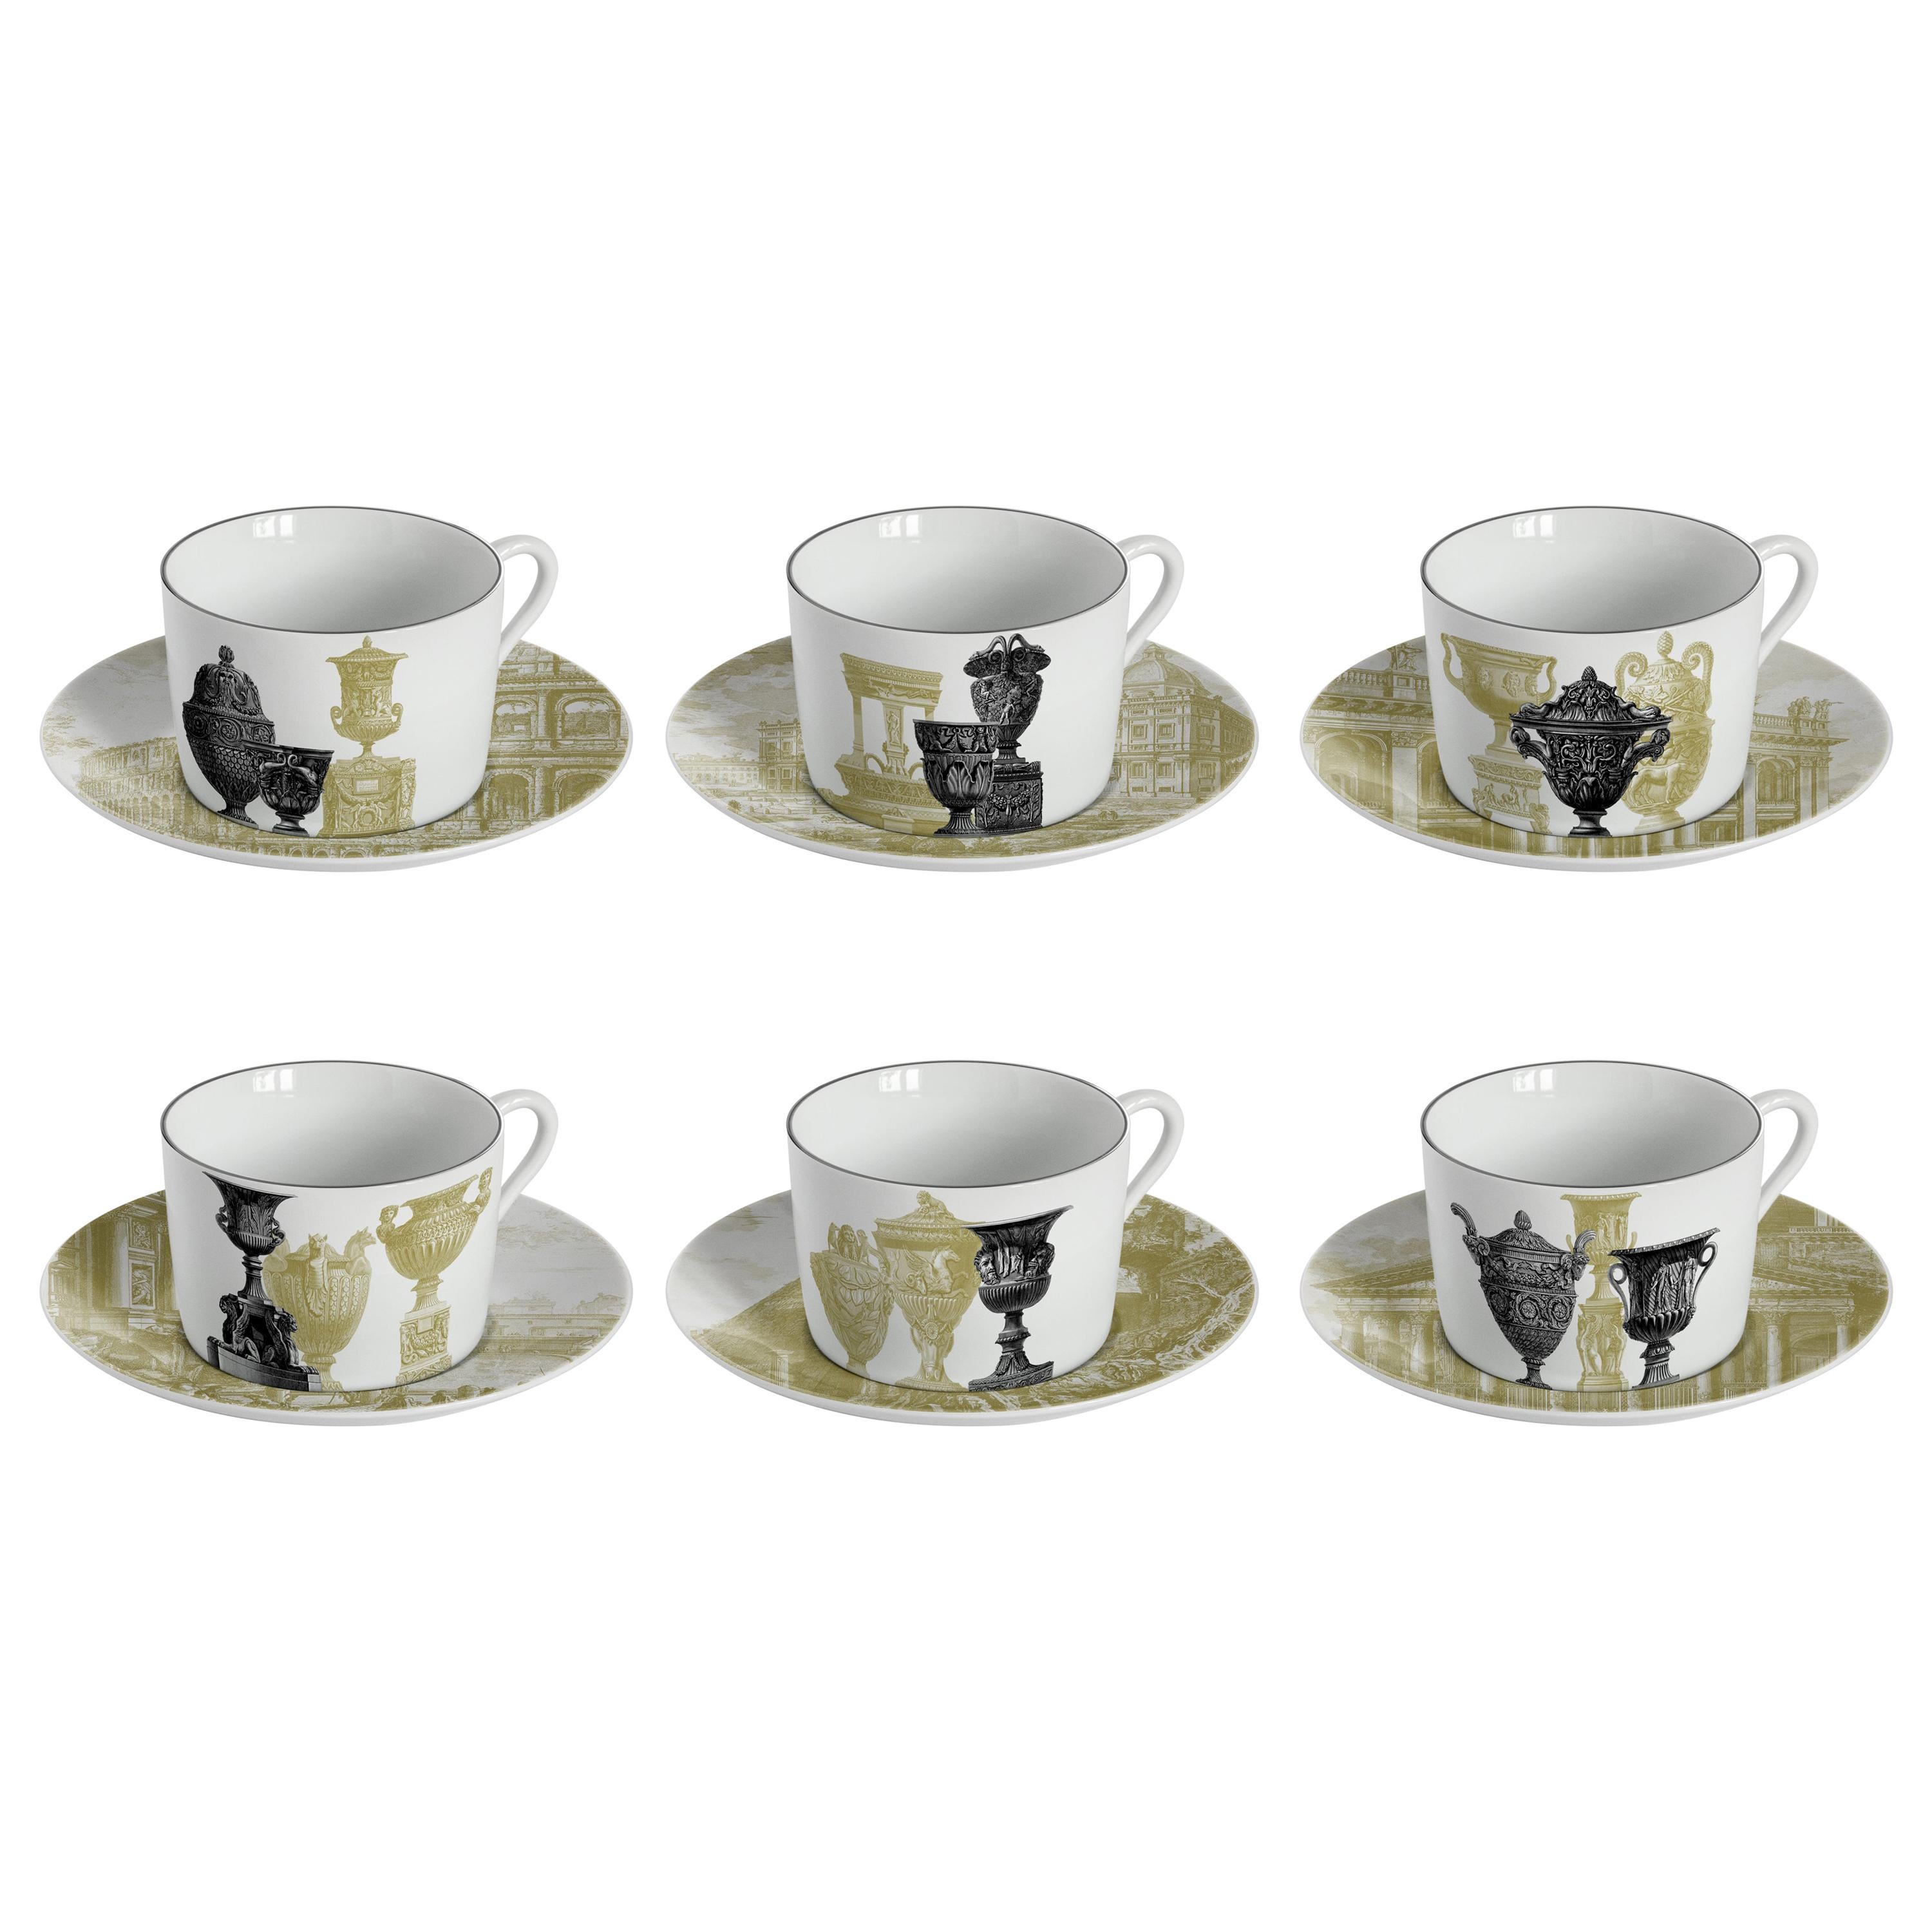 Roma, Tea Set with Six Contemporary Porcelains with Decorative Design